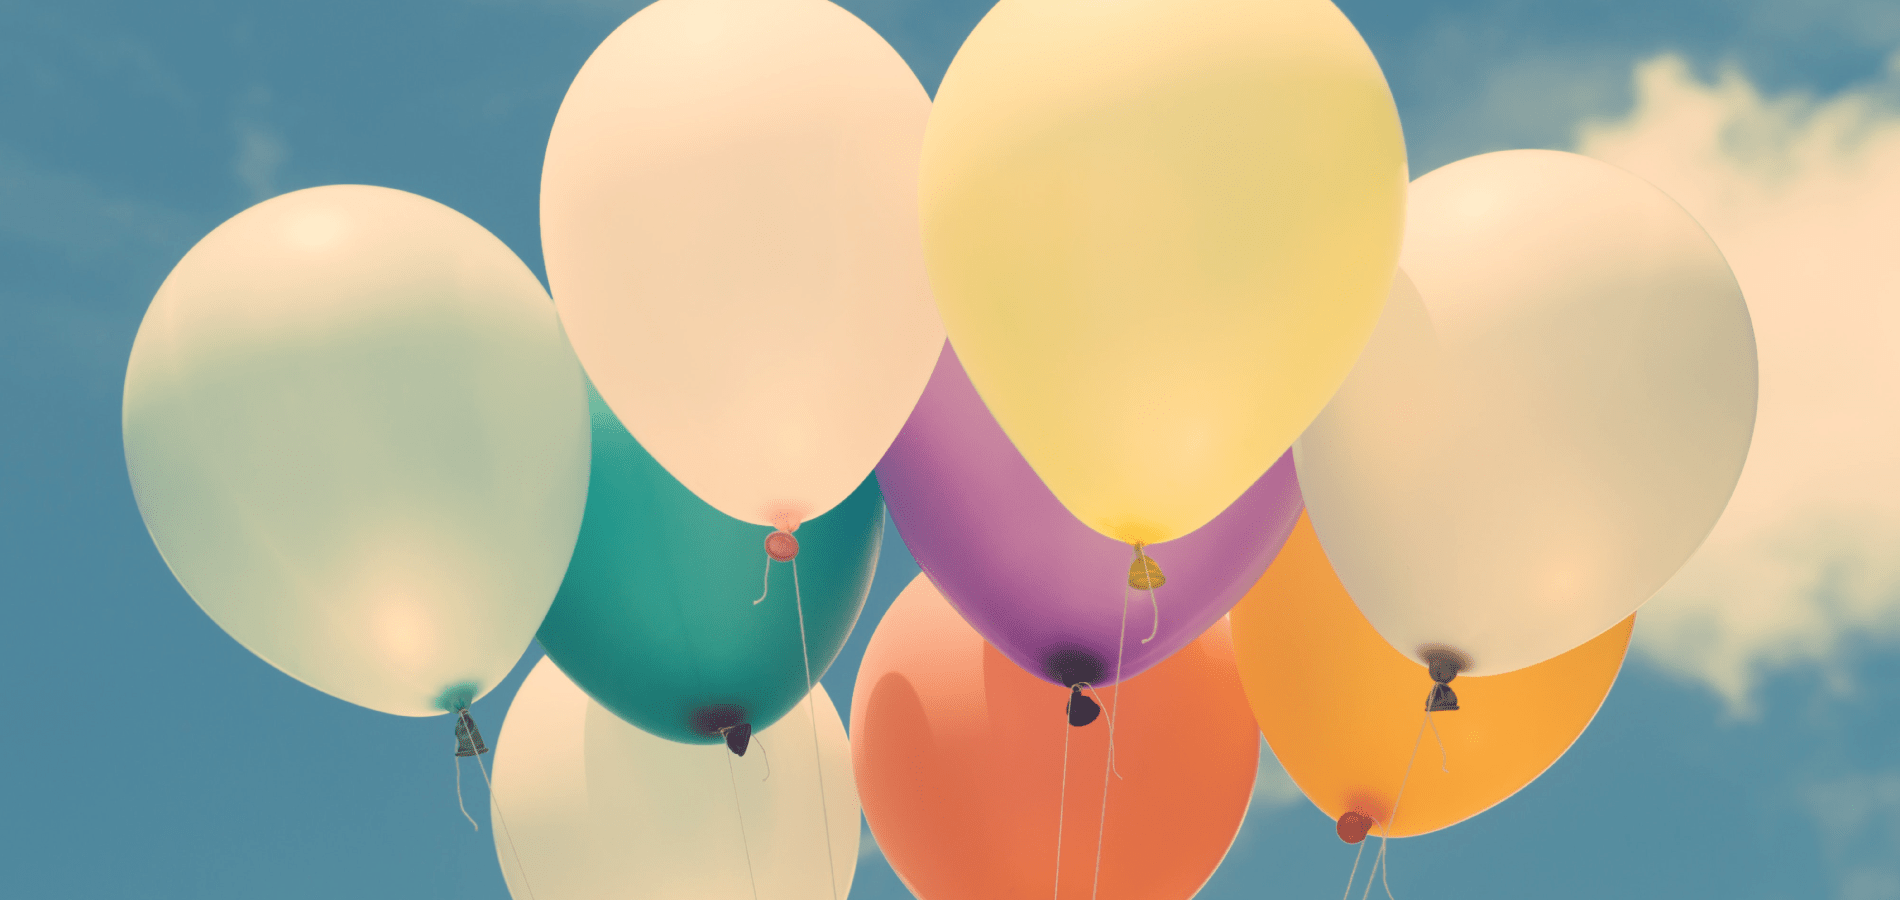 Birthday balloons against blue sky